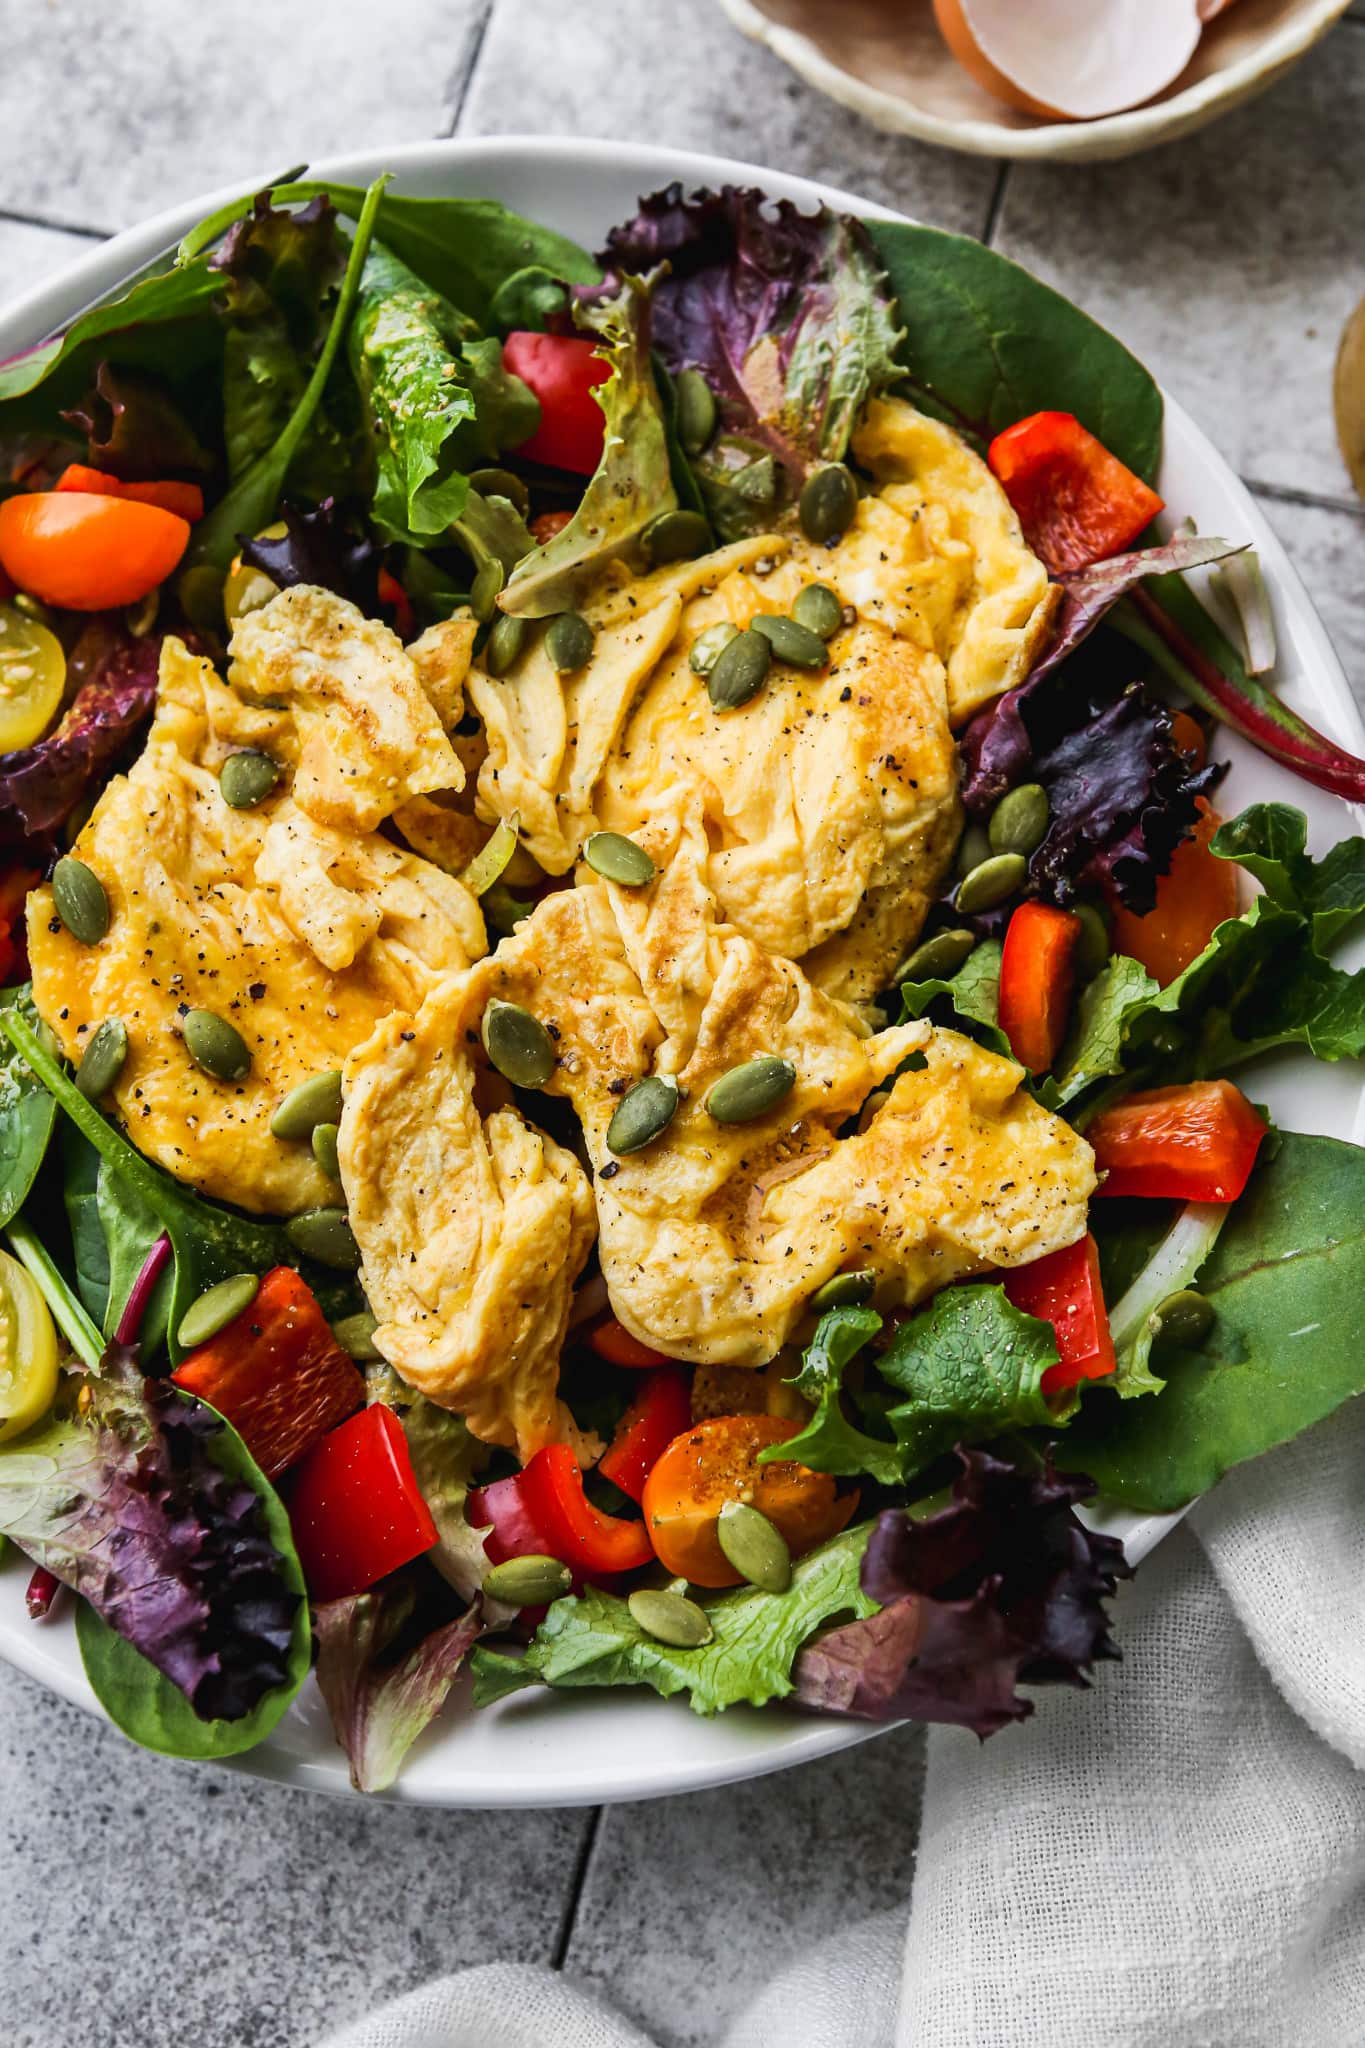 Nutritional Yeast Salad Dressing With Tamari | Walder Wellness, RD